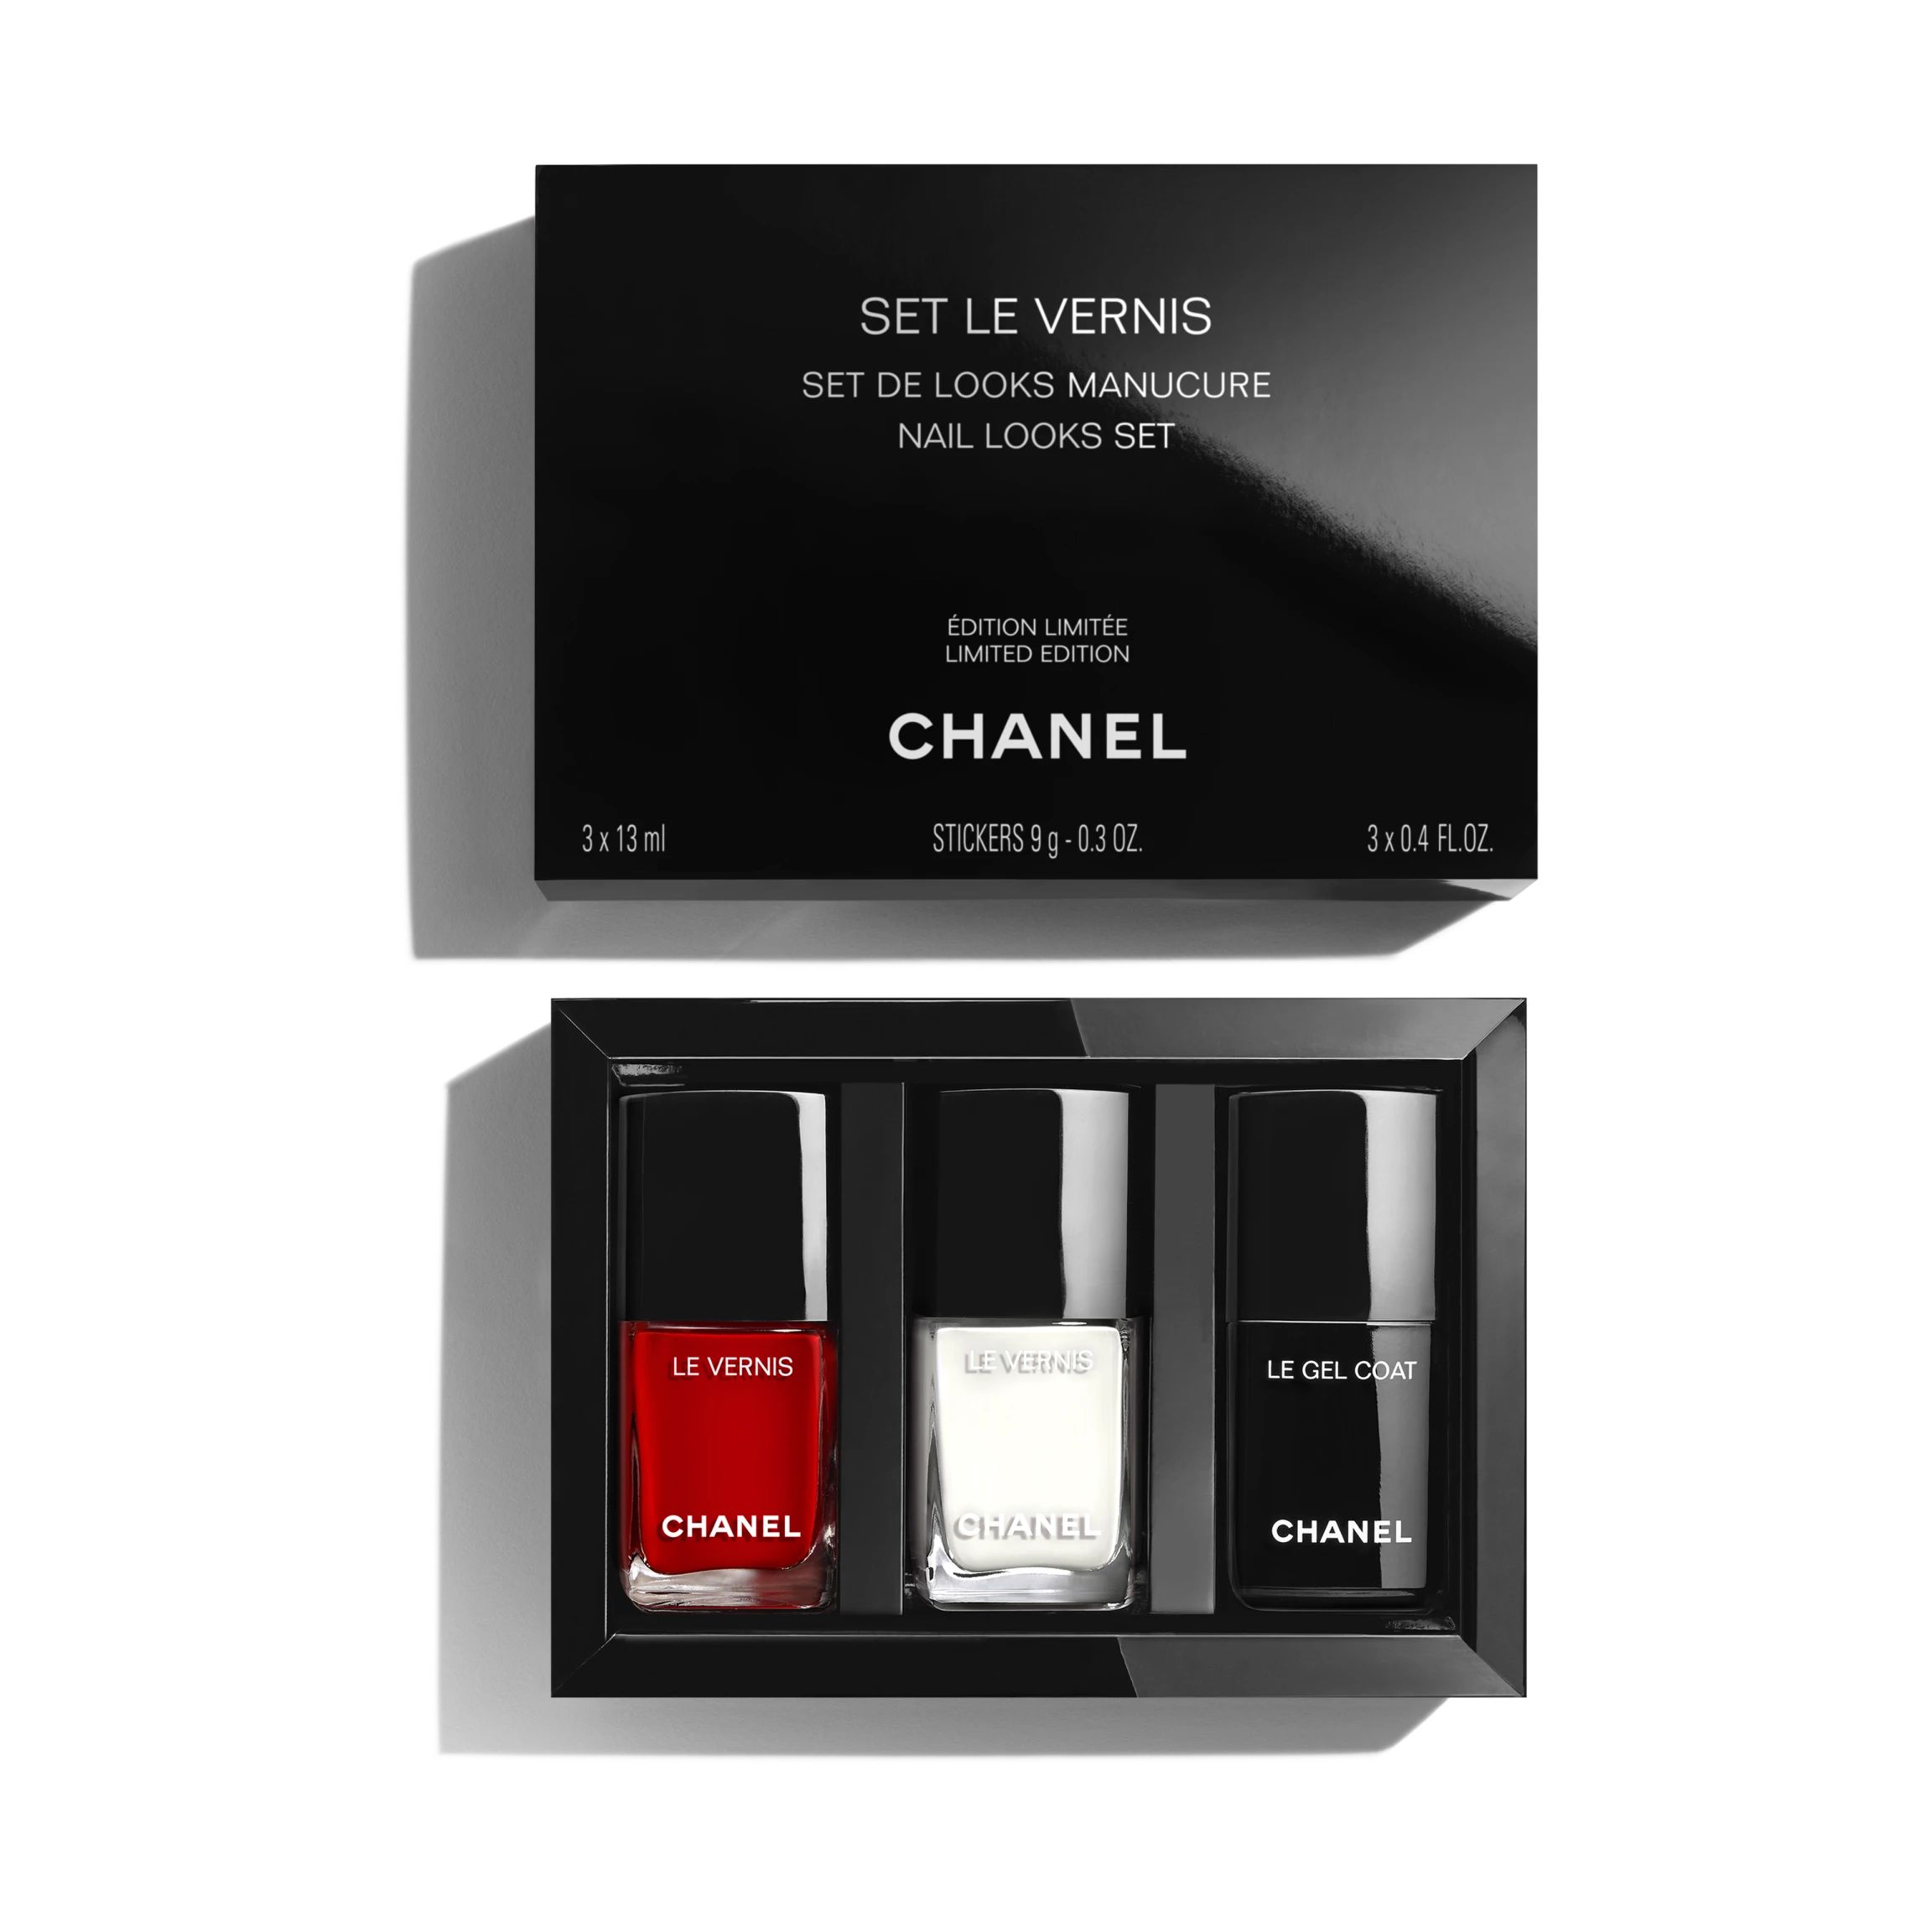 SET LE VERNIS

            
            Nail Looks Set | Chanel, Inc. (US)